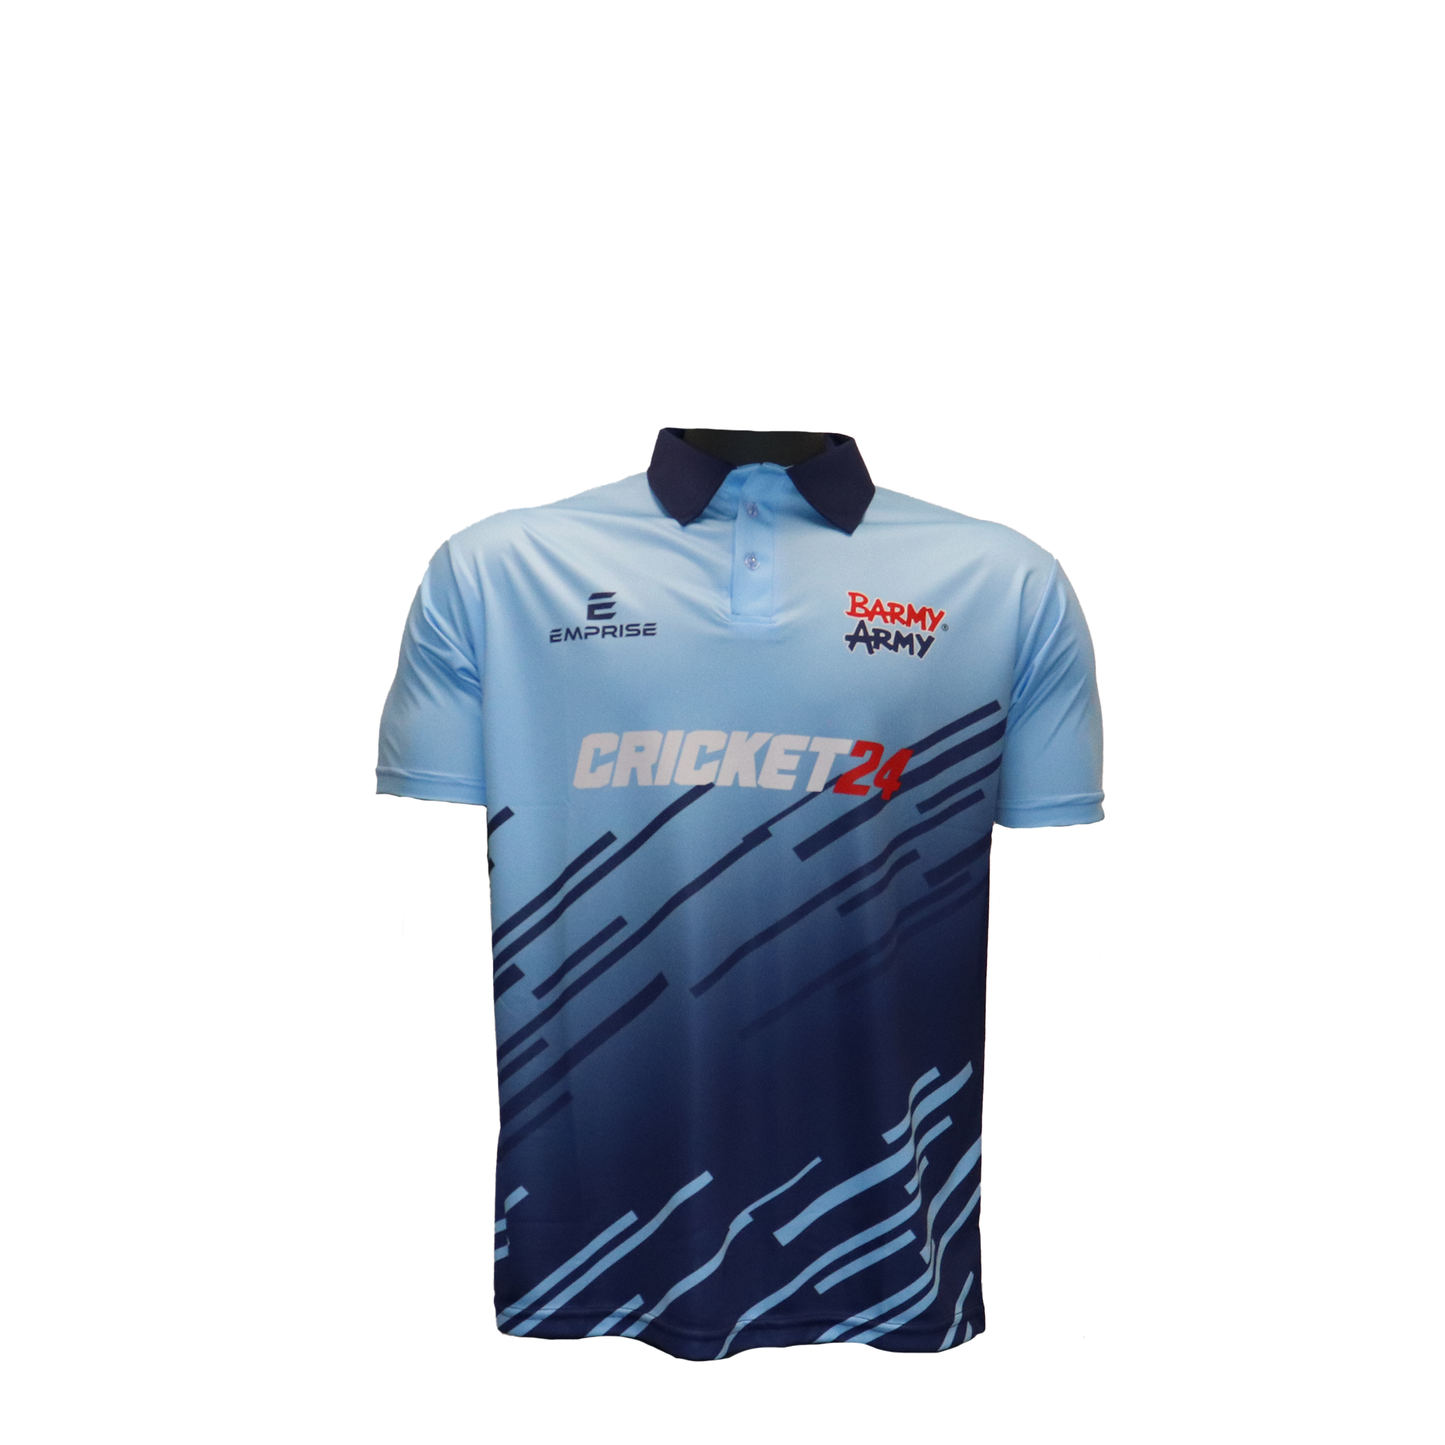 Cricket 24 x Barmy Army Cricket Shirt - Model 2